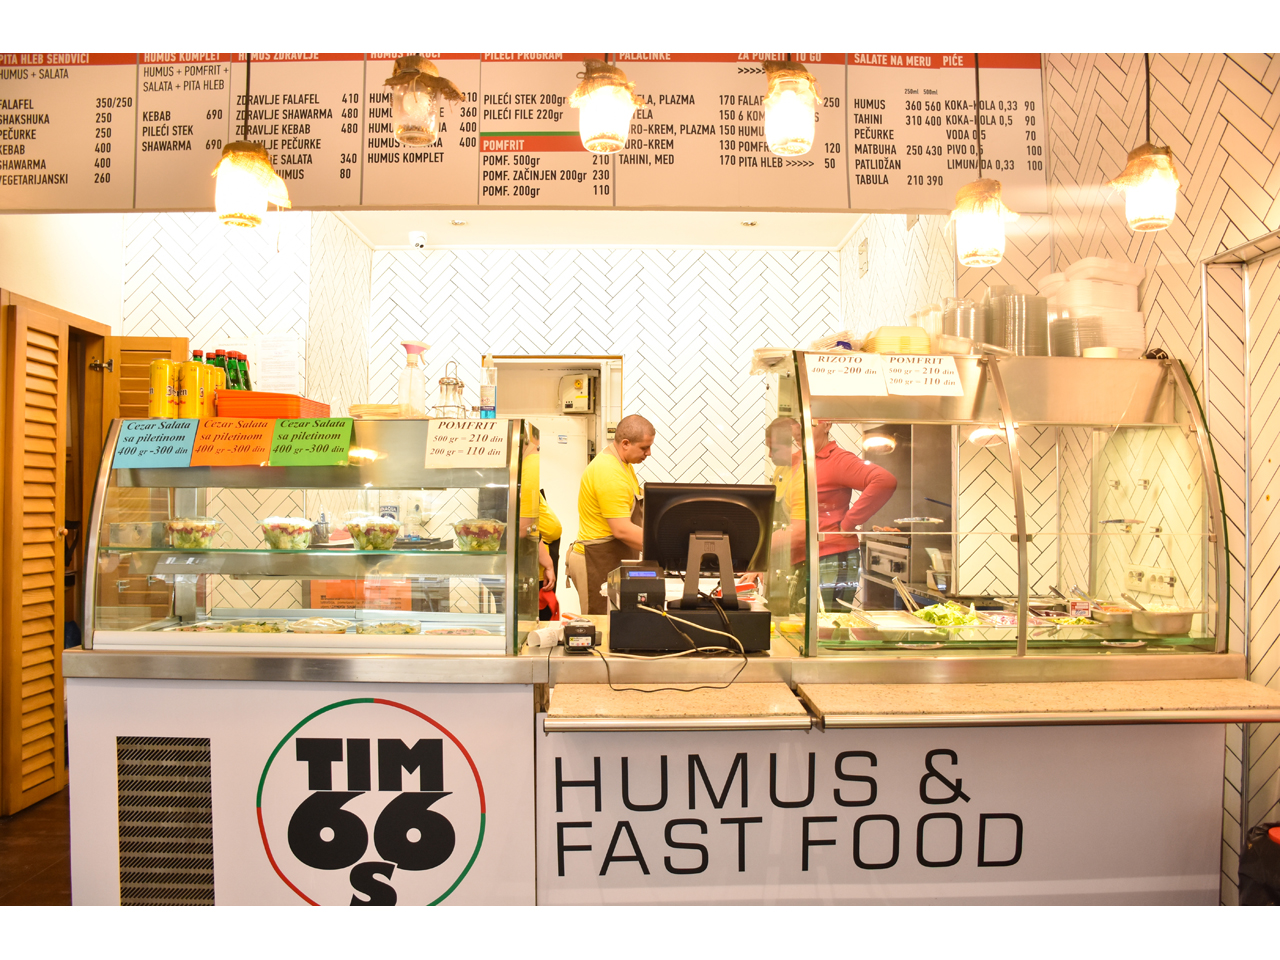 HUMUS & FAST FOOD BAR TIM 66 S Vegetarian restaurants, macrobiotic food Belgrade - Photo 2